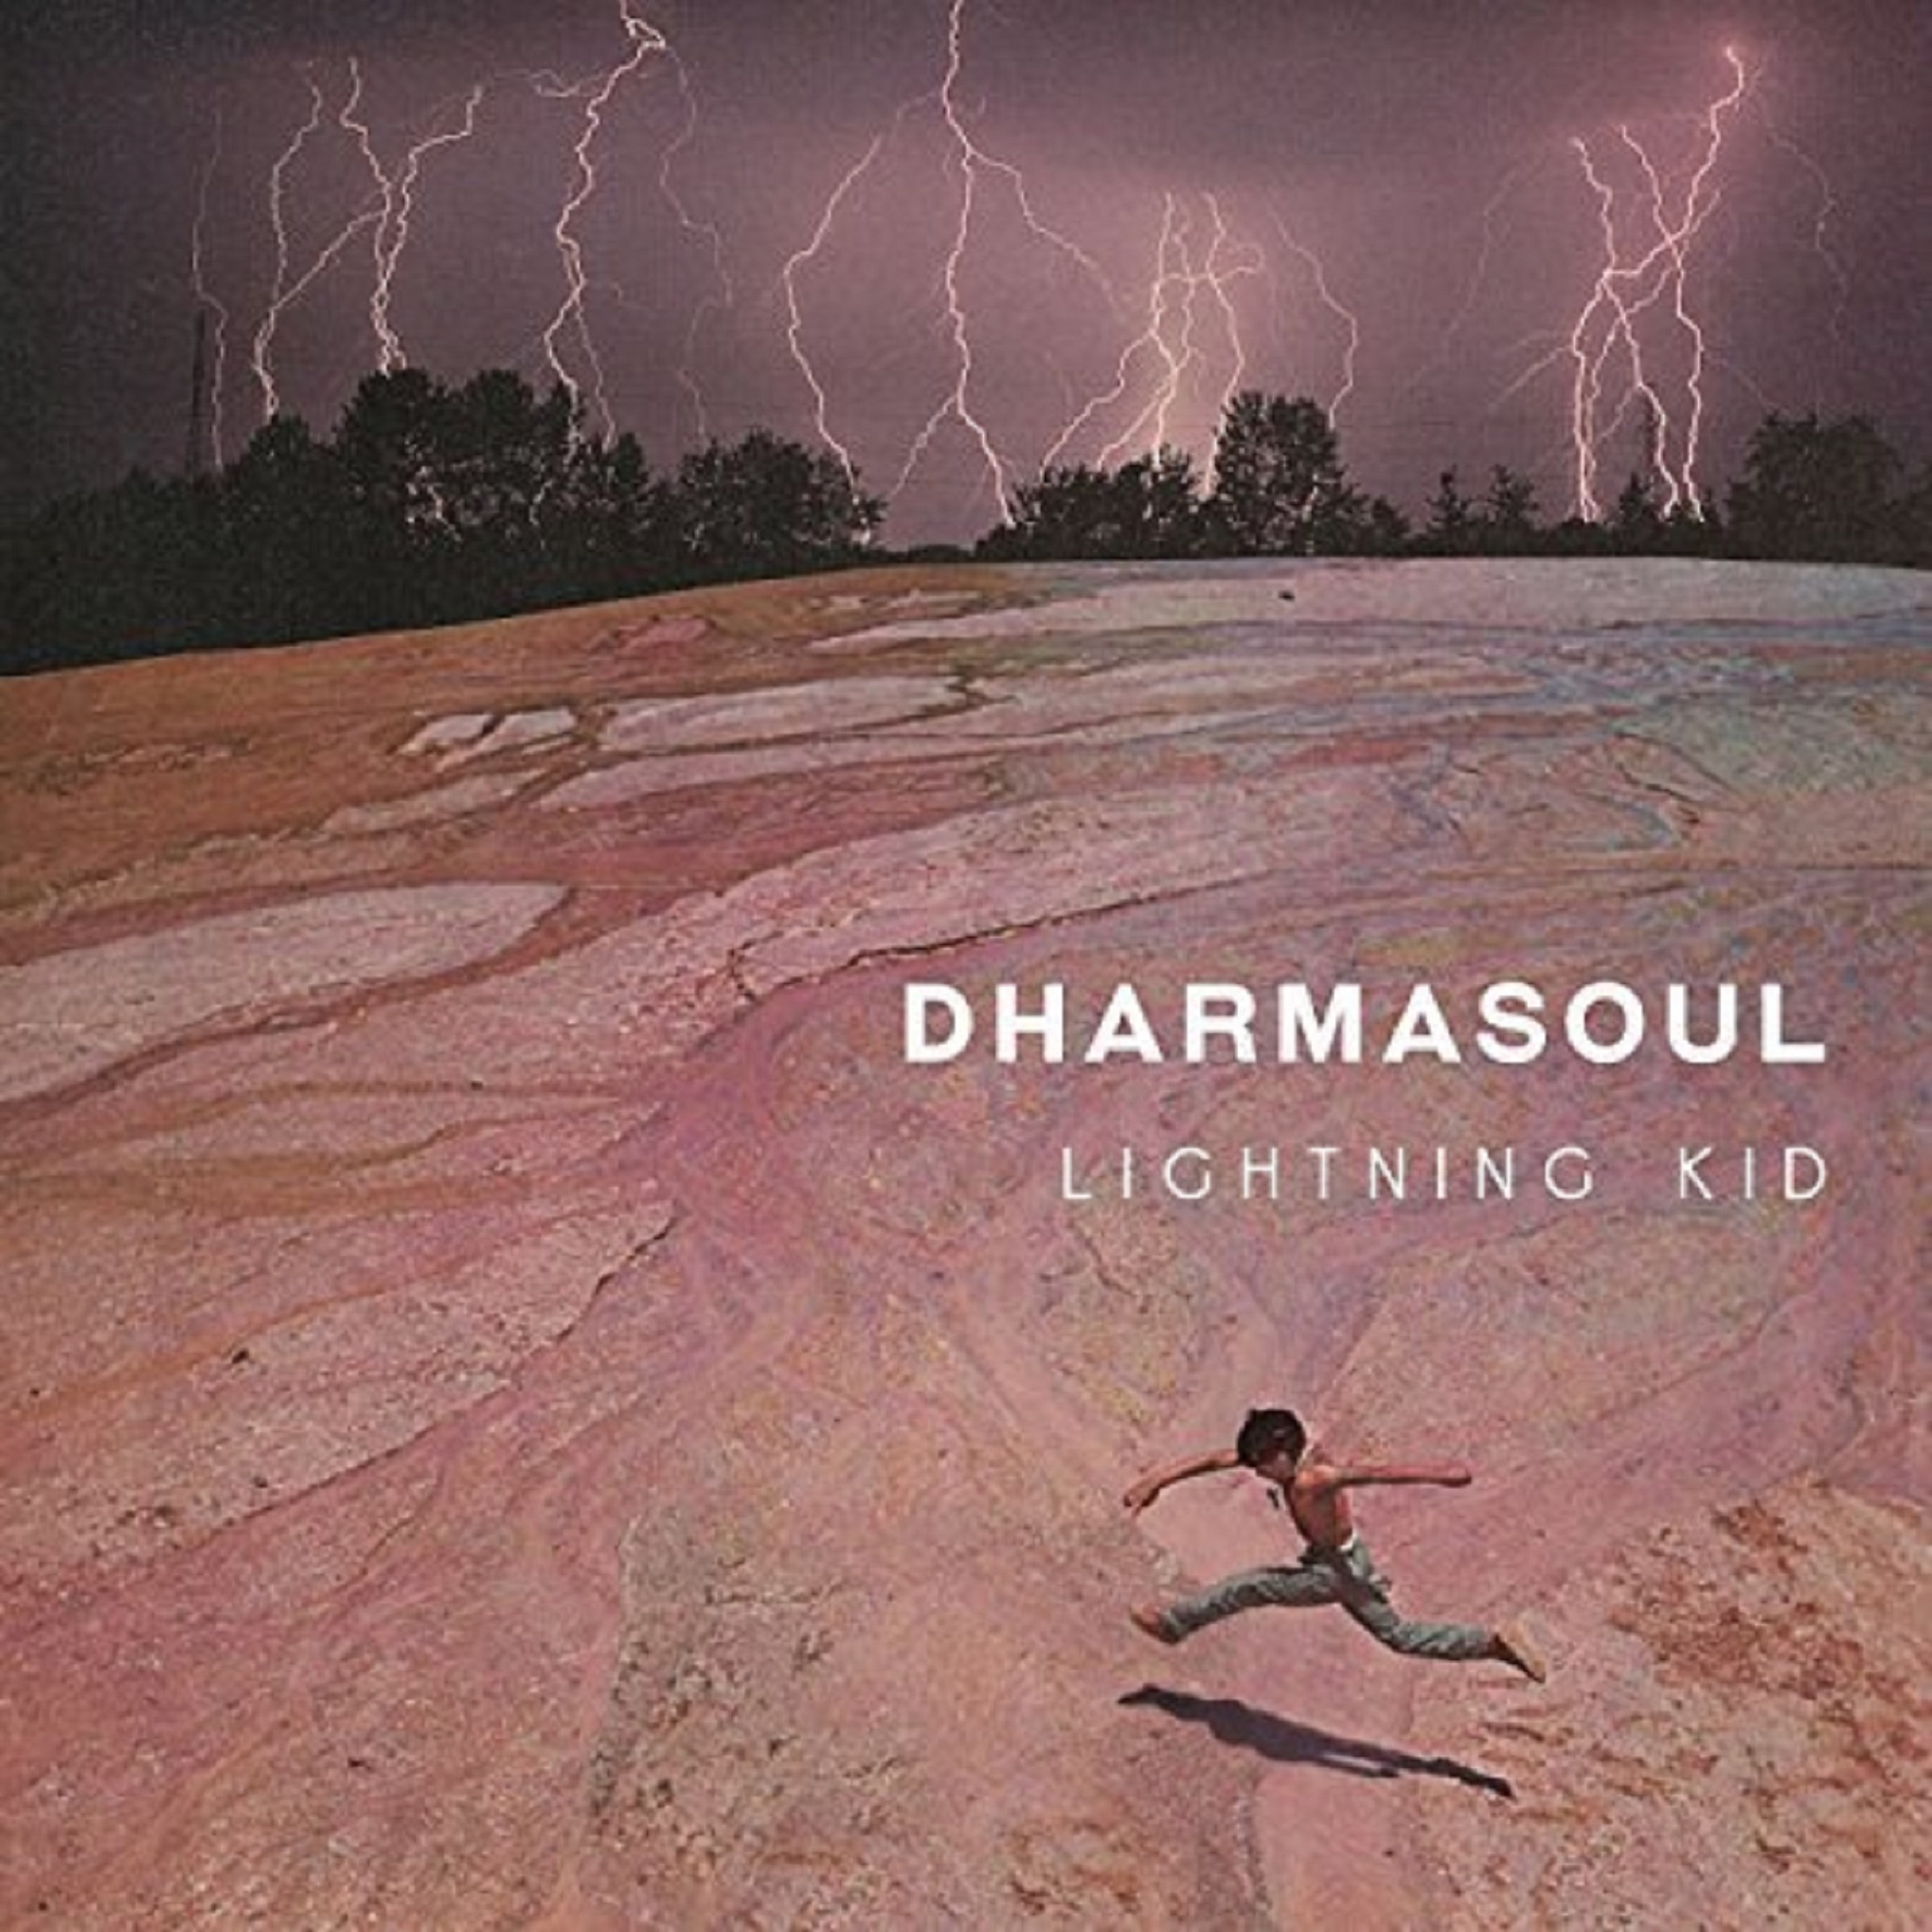 Dharmasoul To Release Debut Album Lightning Kid, June 1